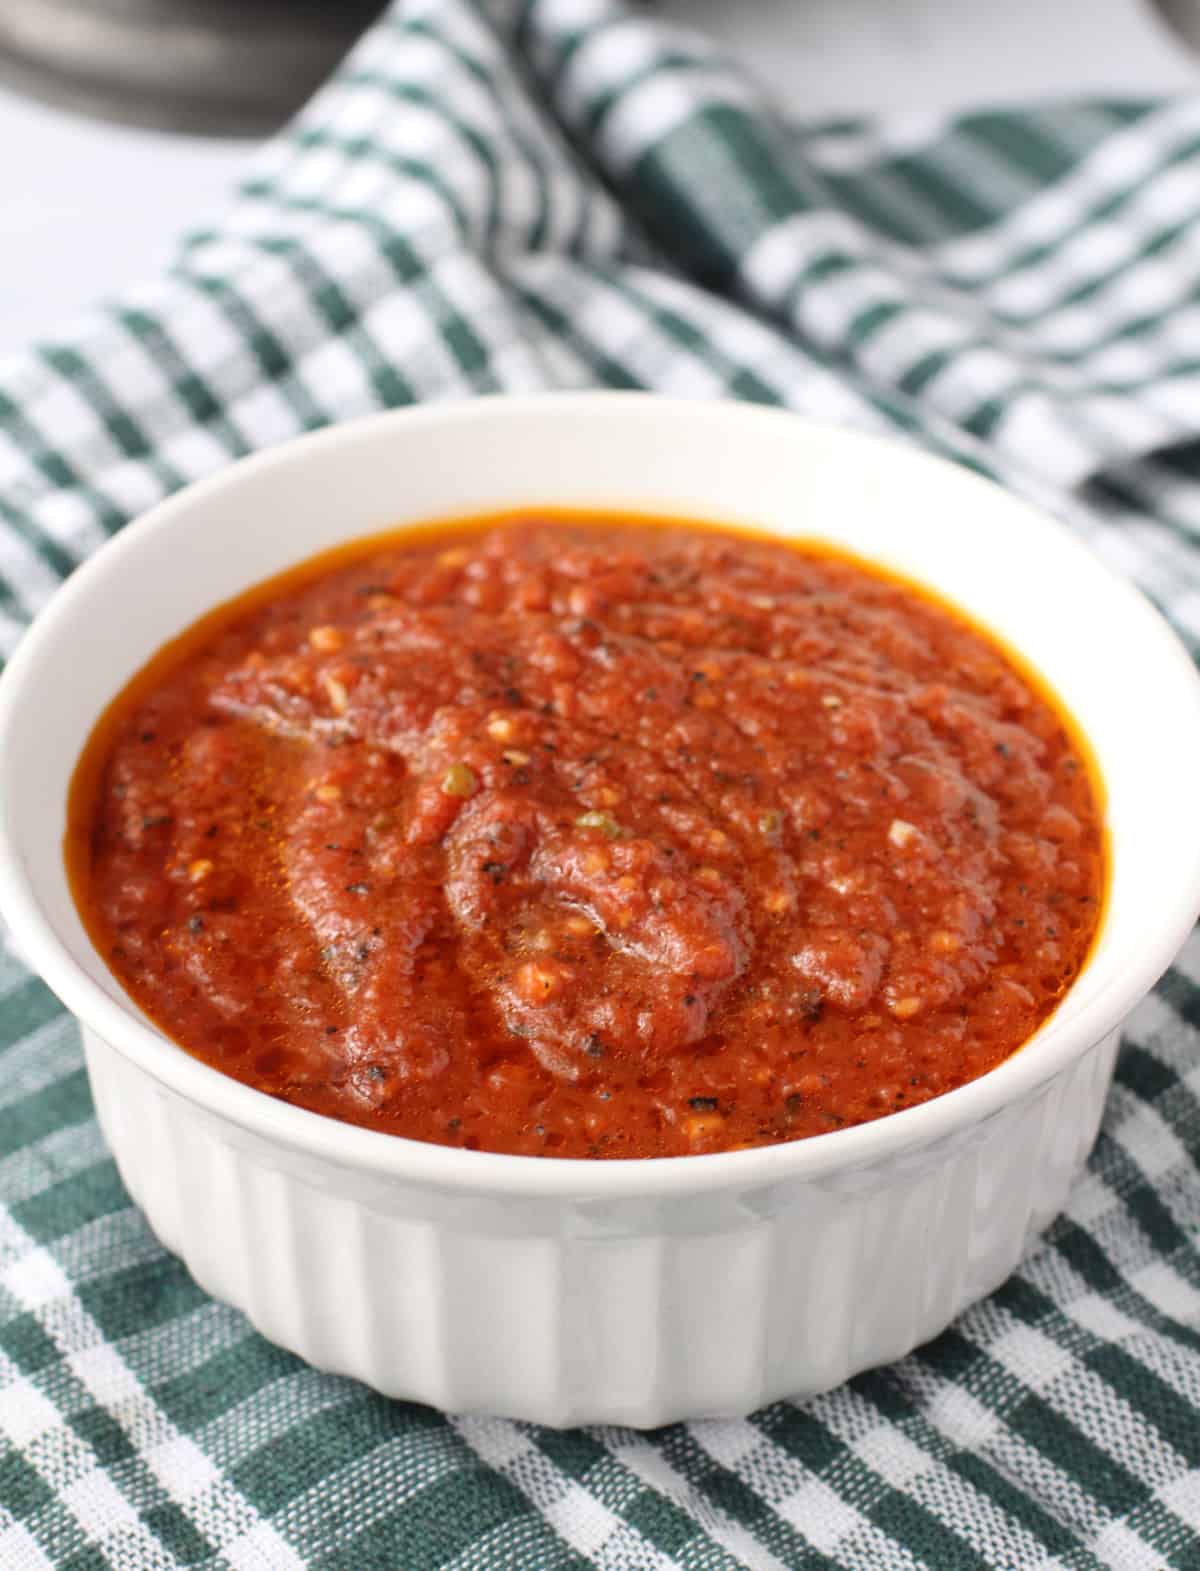 Homemade tomato sauce in a casserole bowl.